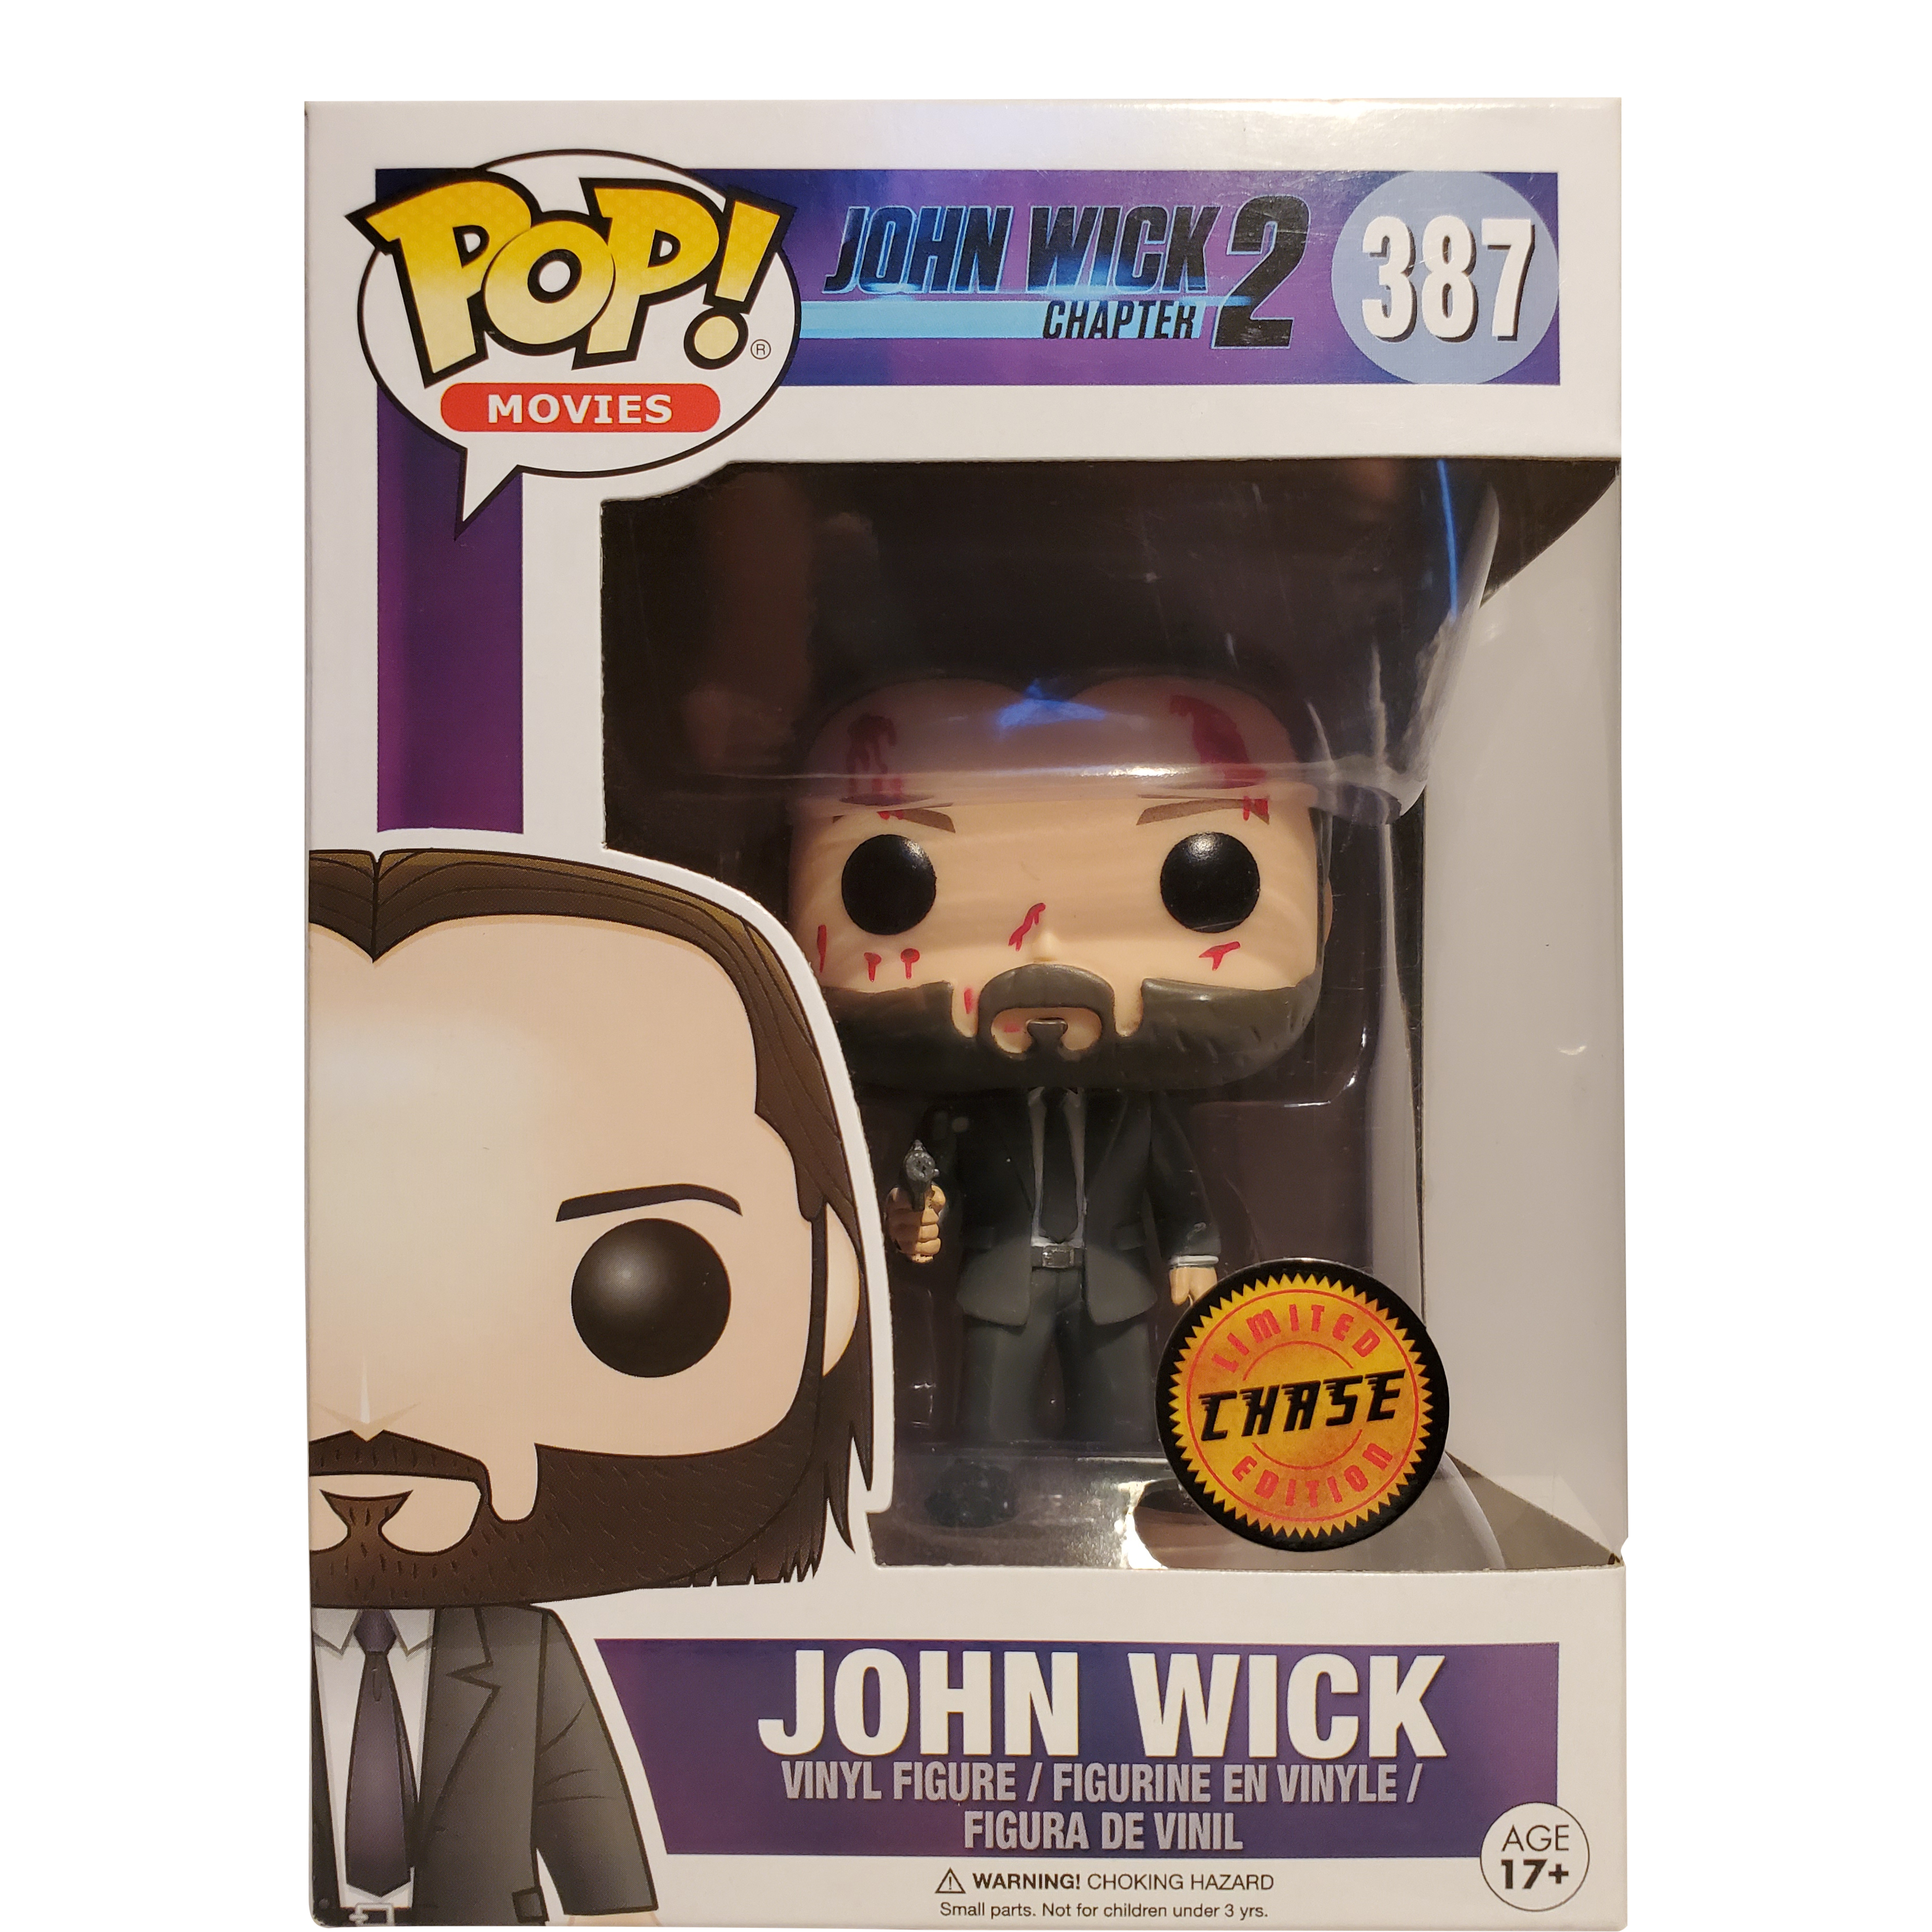 Hot Funko Pop Movies John Wick Chapter 2 Vinyl Action Figure Toys Model 10CM 